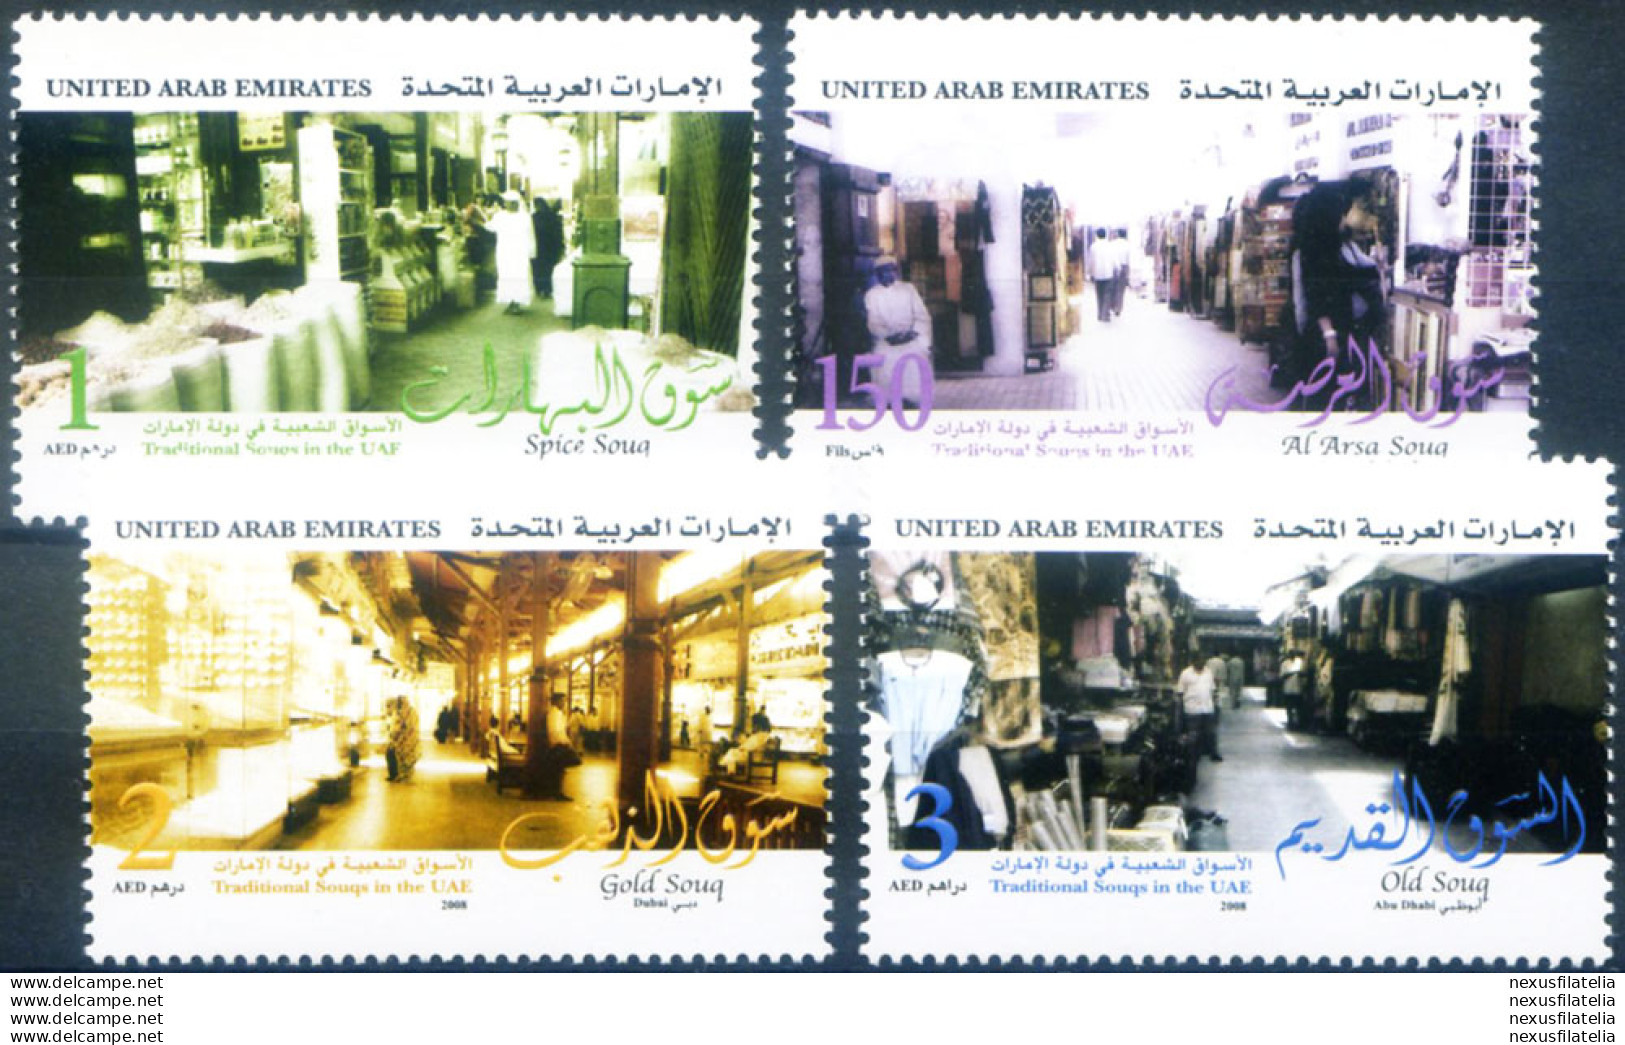 Mercati Tradizionali 2008. - United Arab Emirates (General)